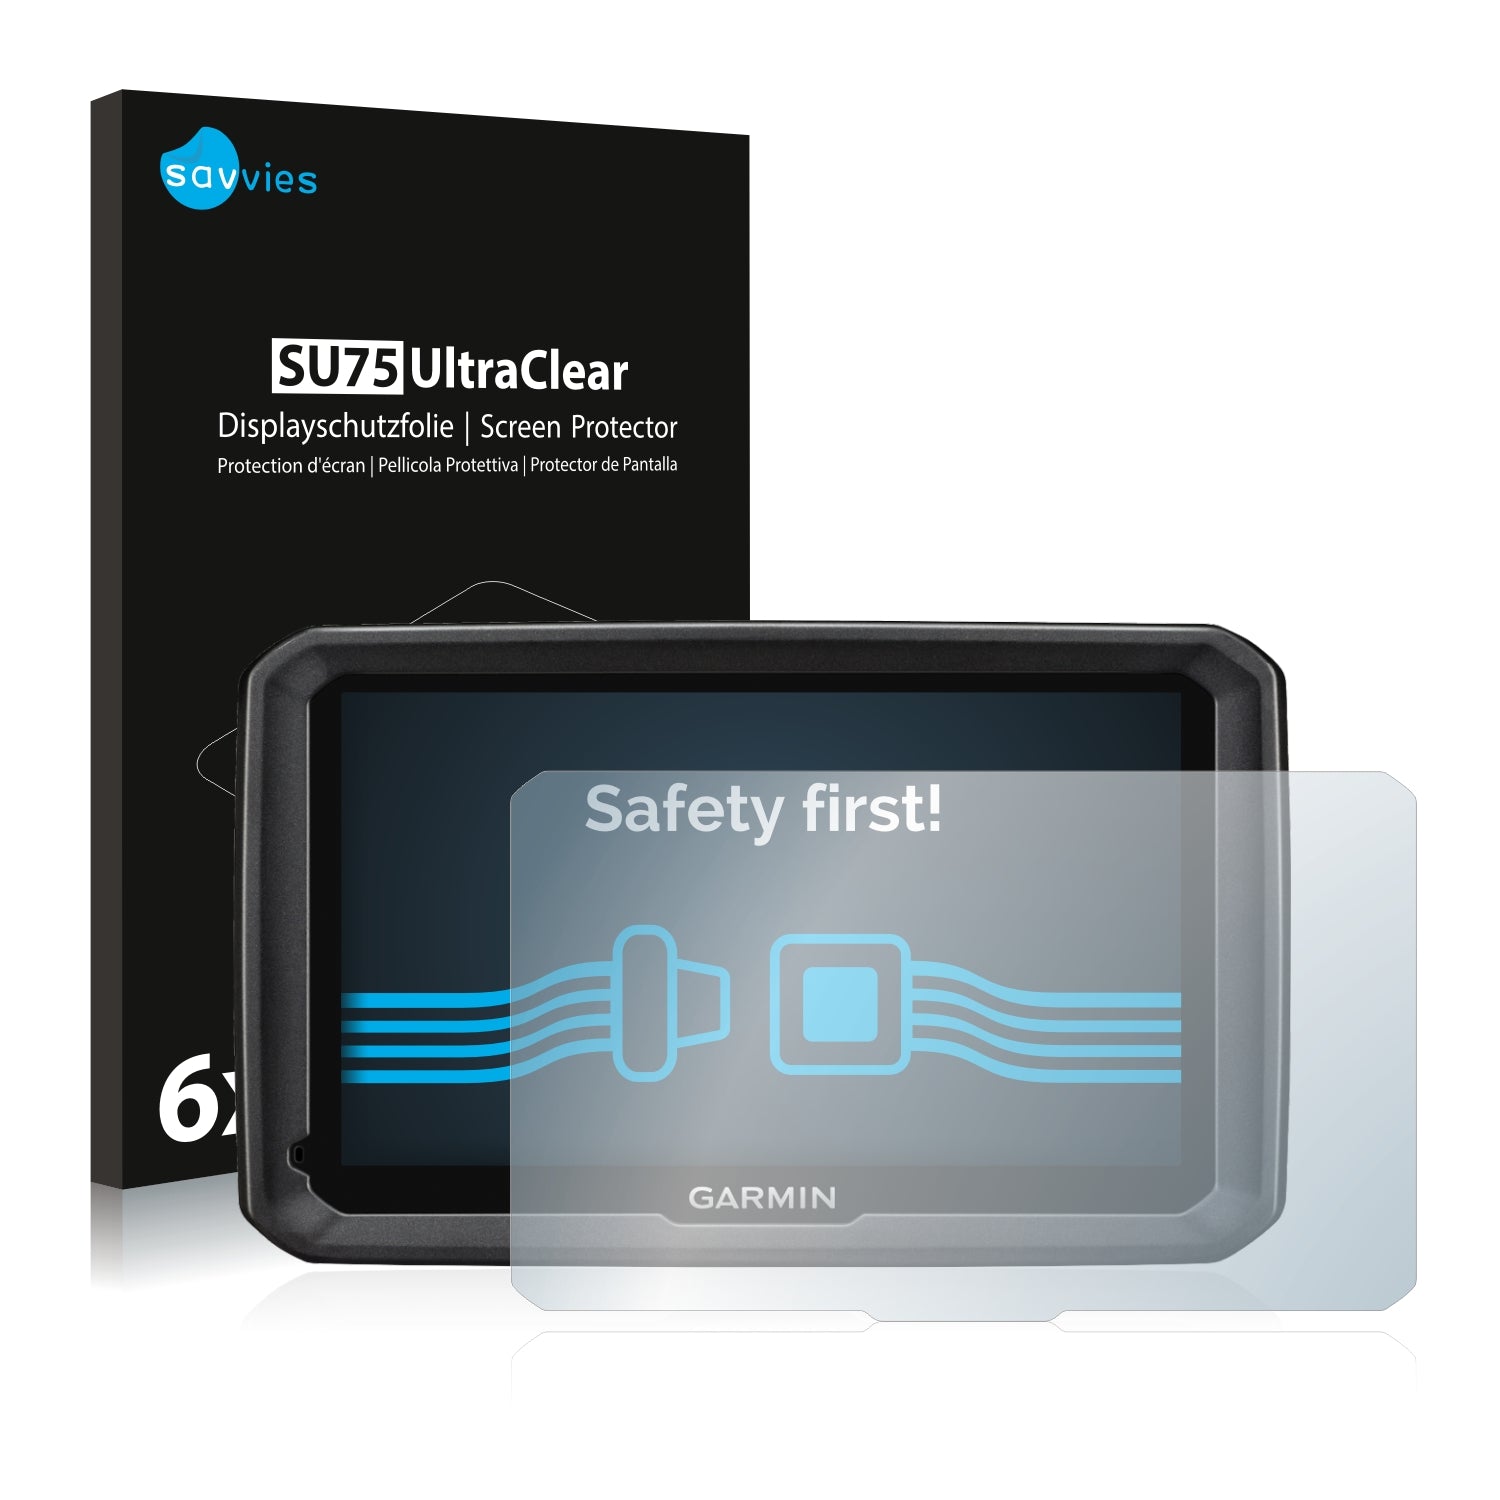 6x Savvies Screen Protector for Garmin dezl 770 LMT-D Ultra Clear 